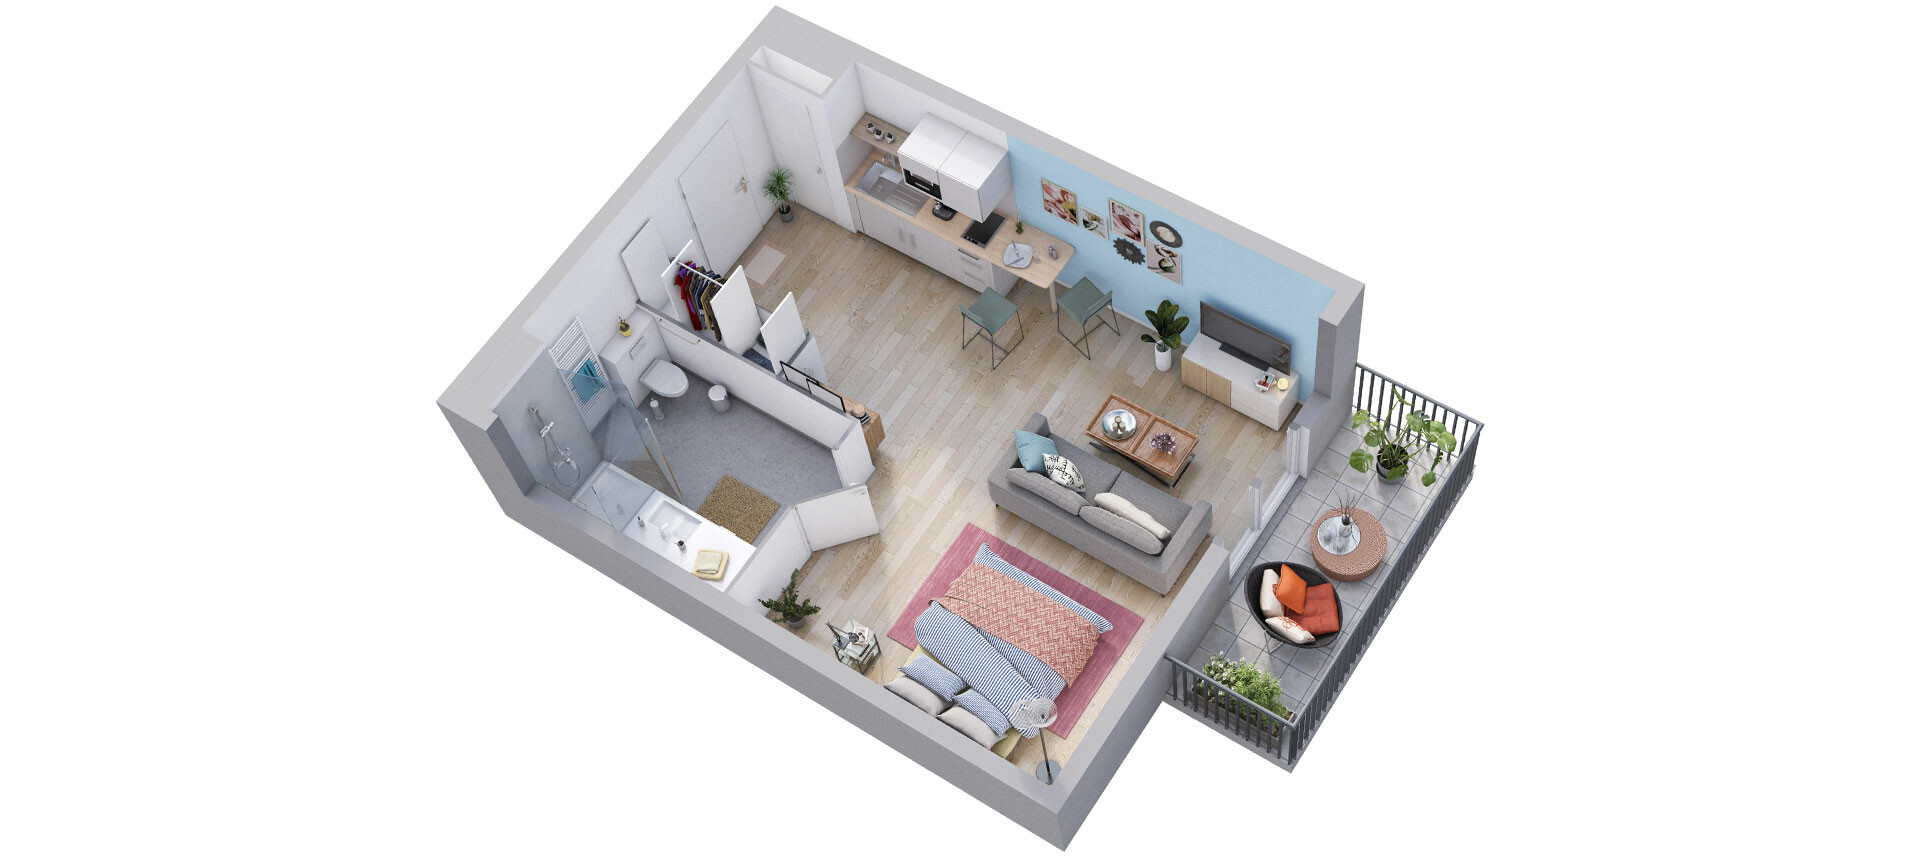 plan-coupe-appartement-type-domitys-studio.jpg